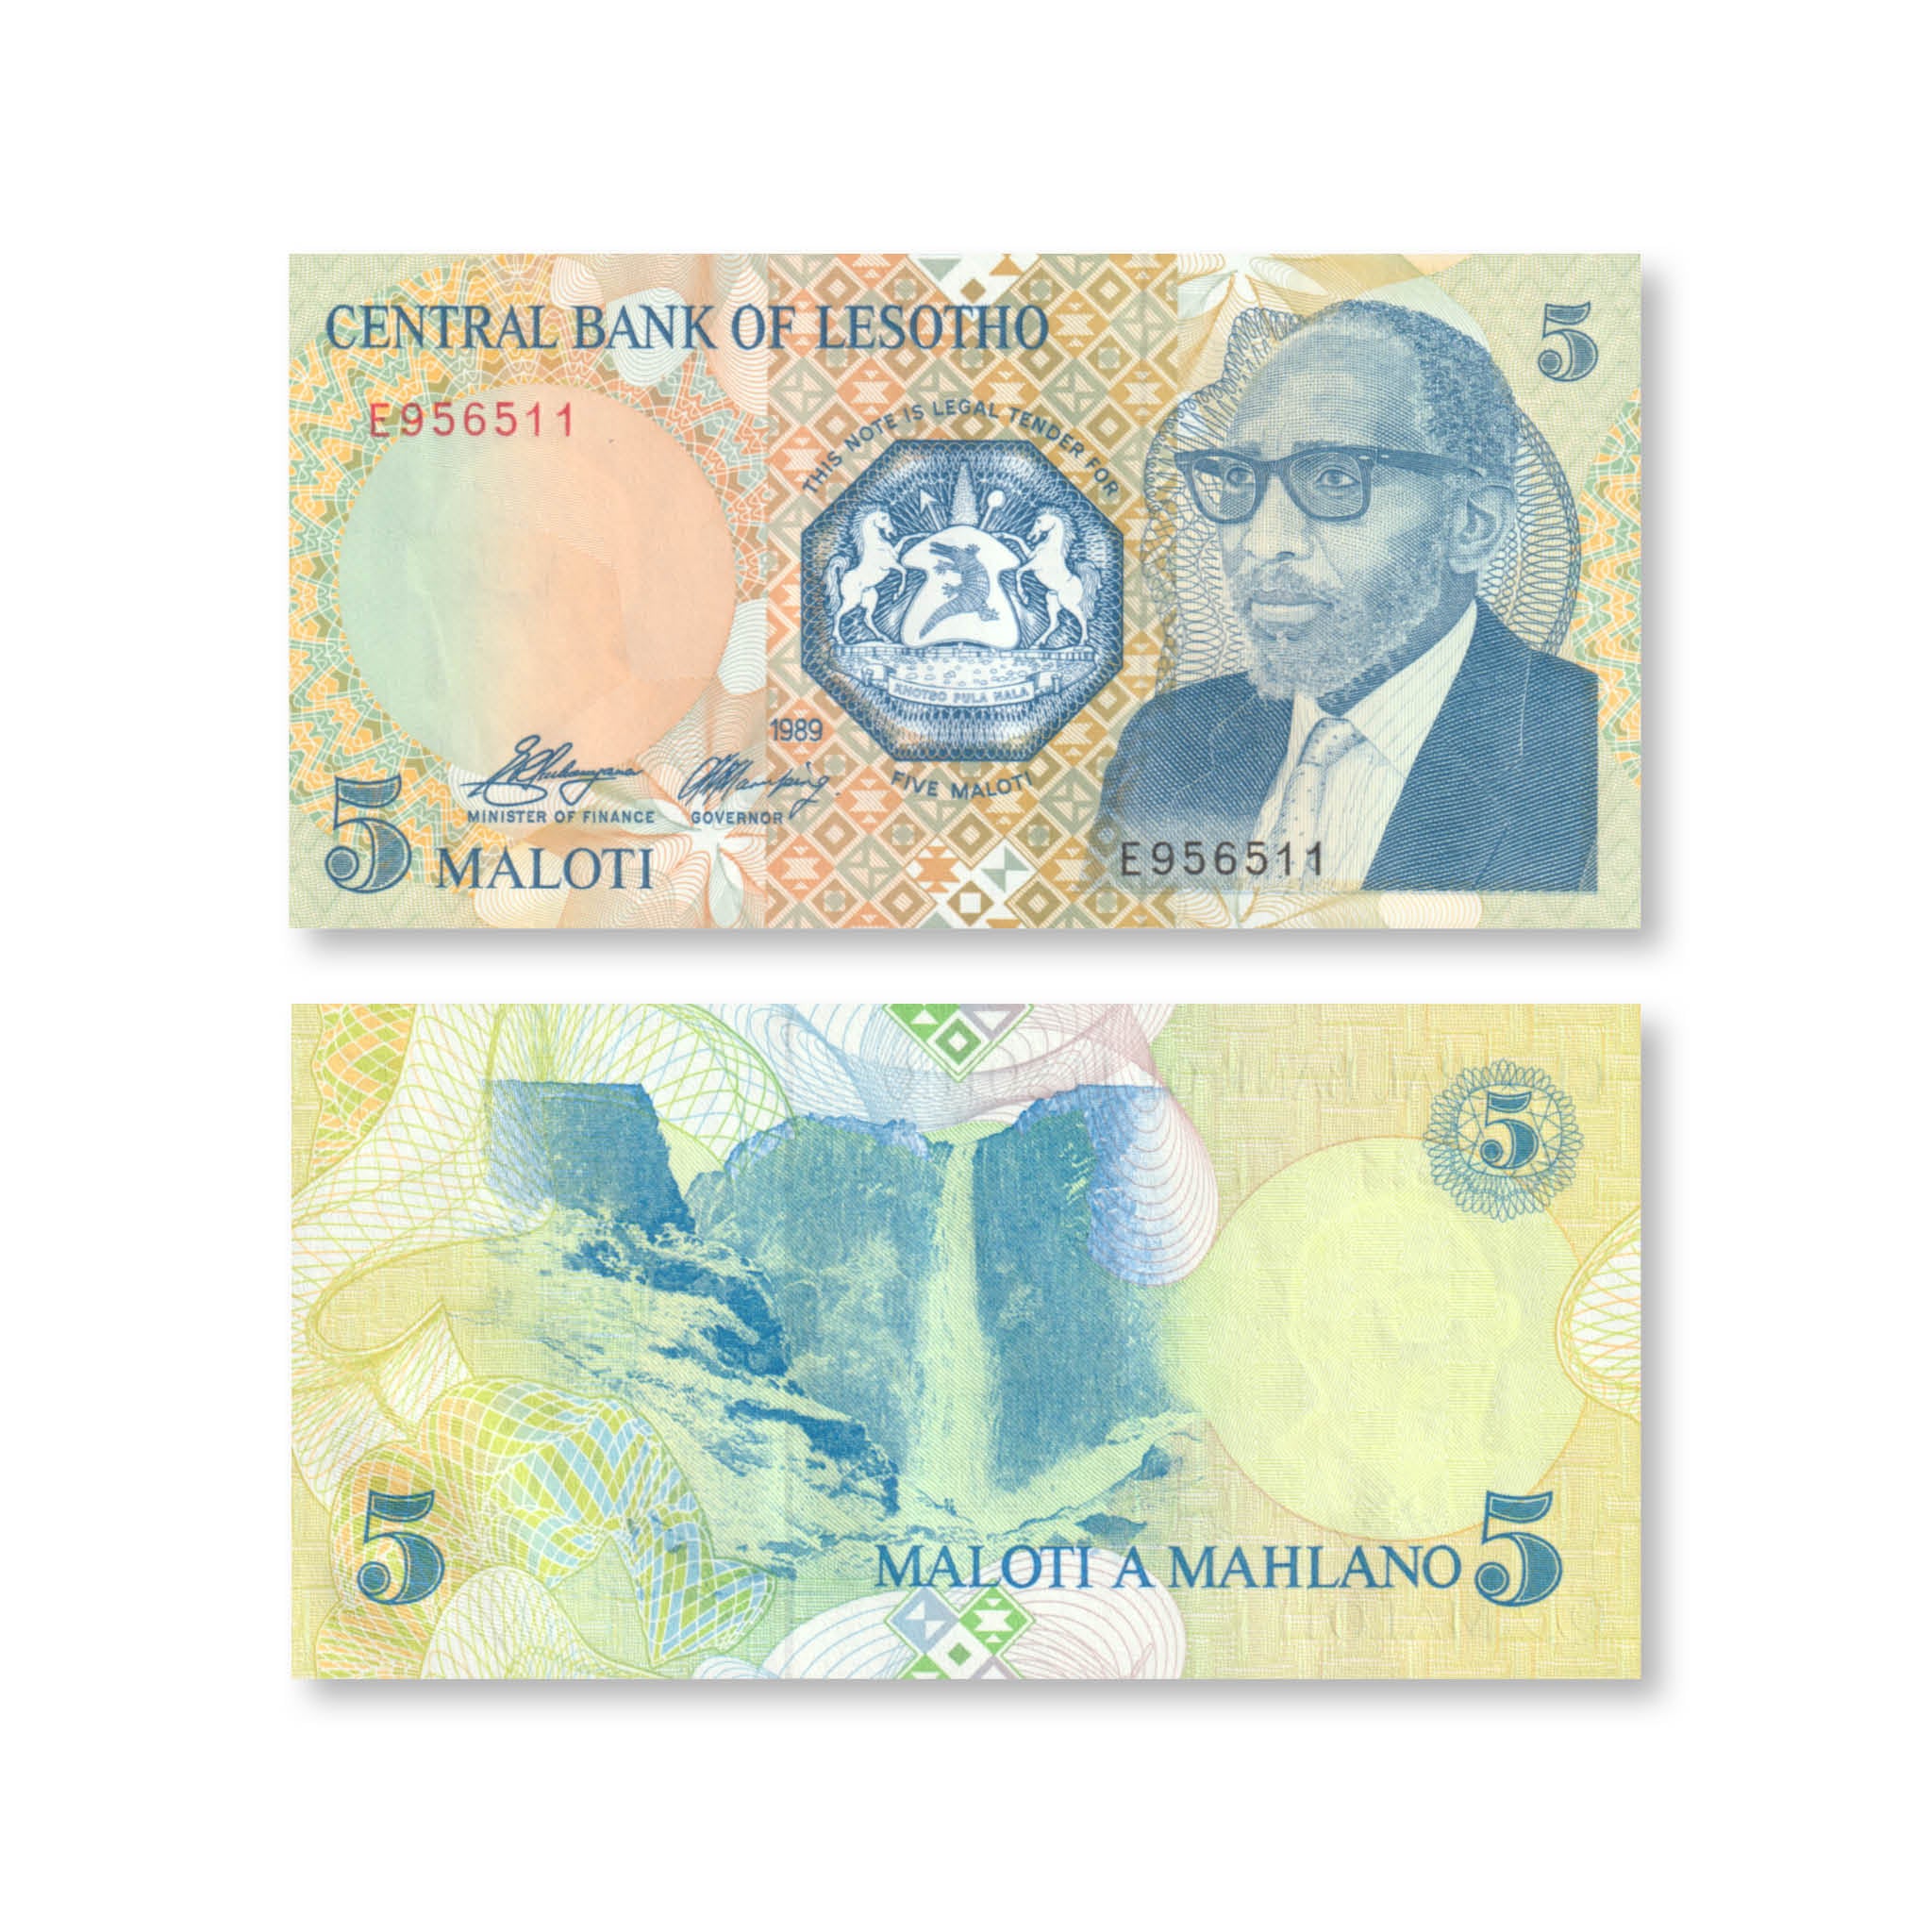 Lesotho 5 Maloti, 1989, B207a, P10a, UNC - Robert's World Money - World Banknotes